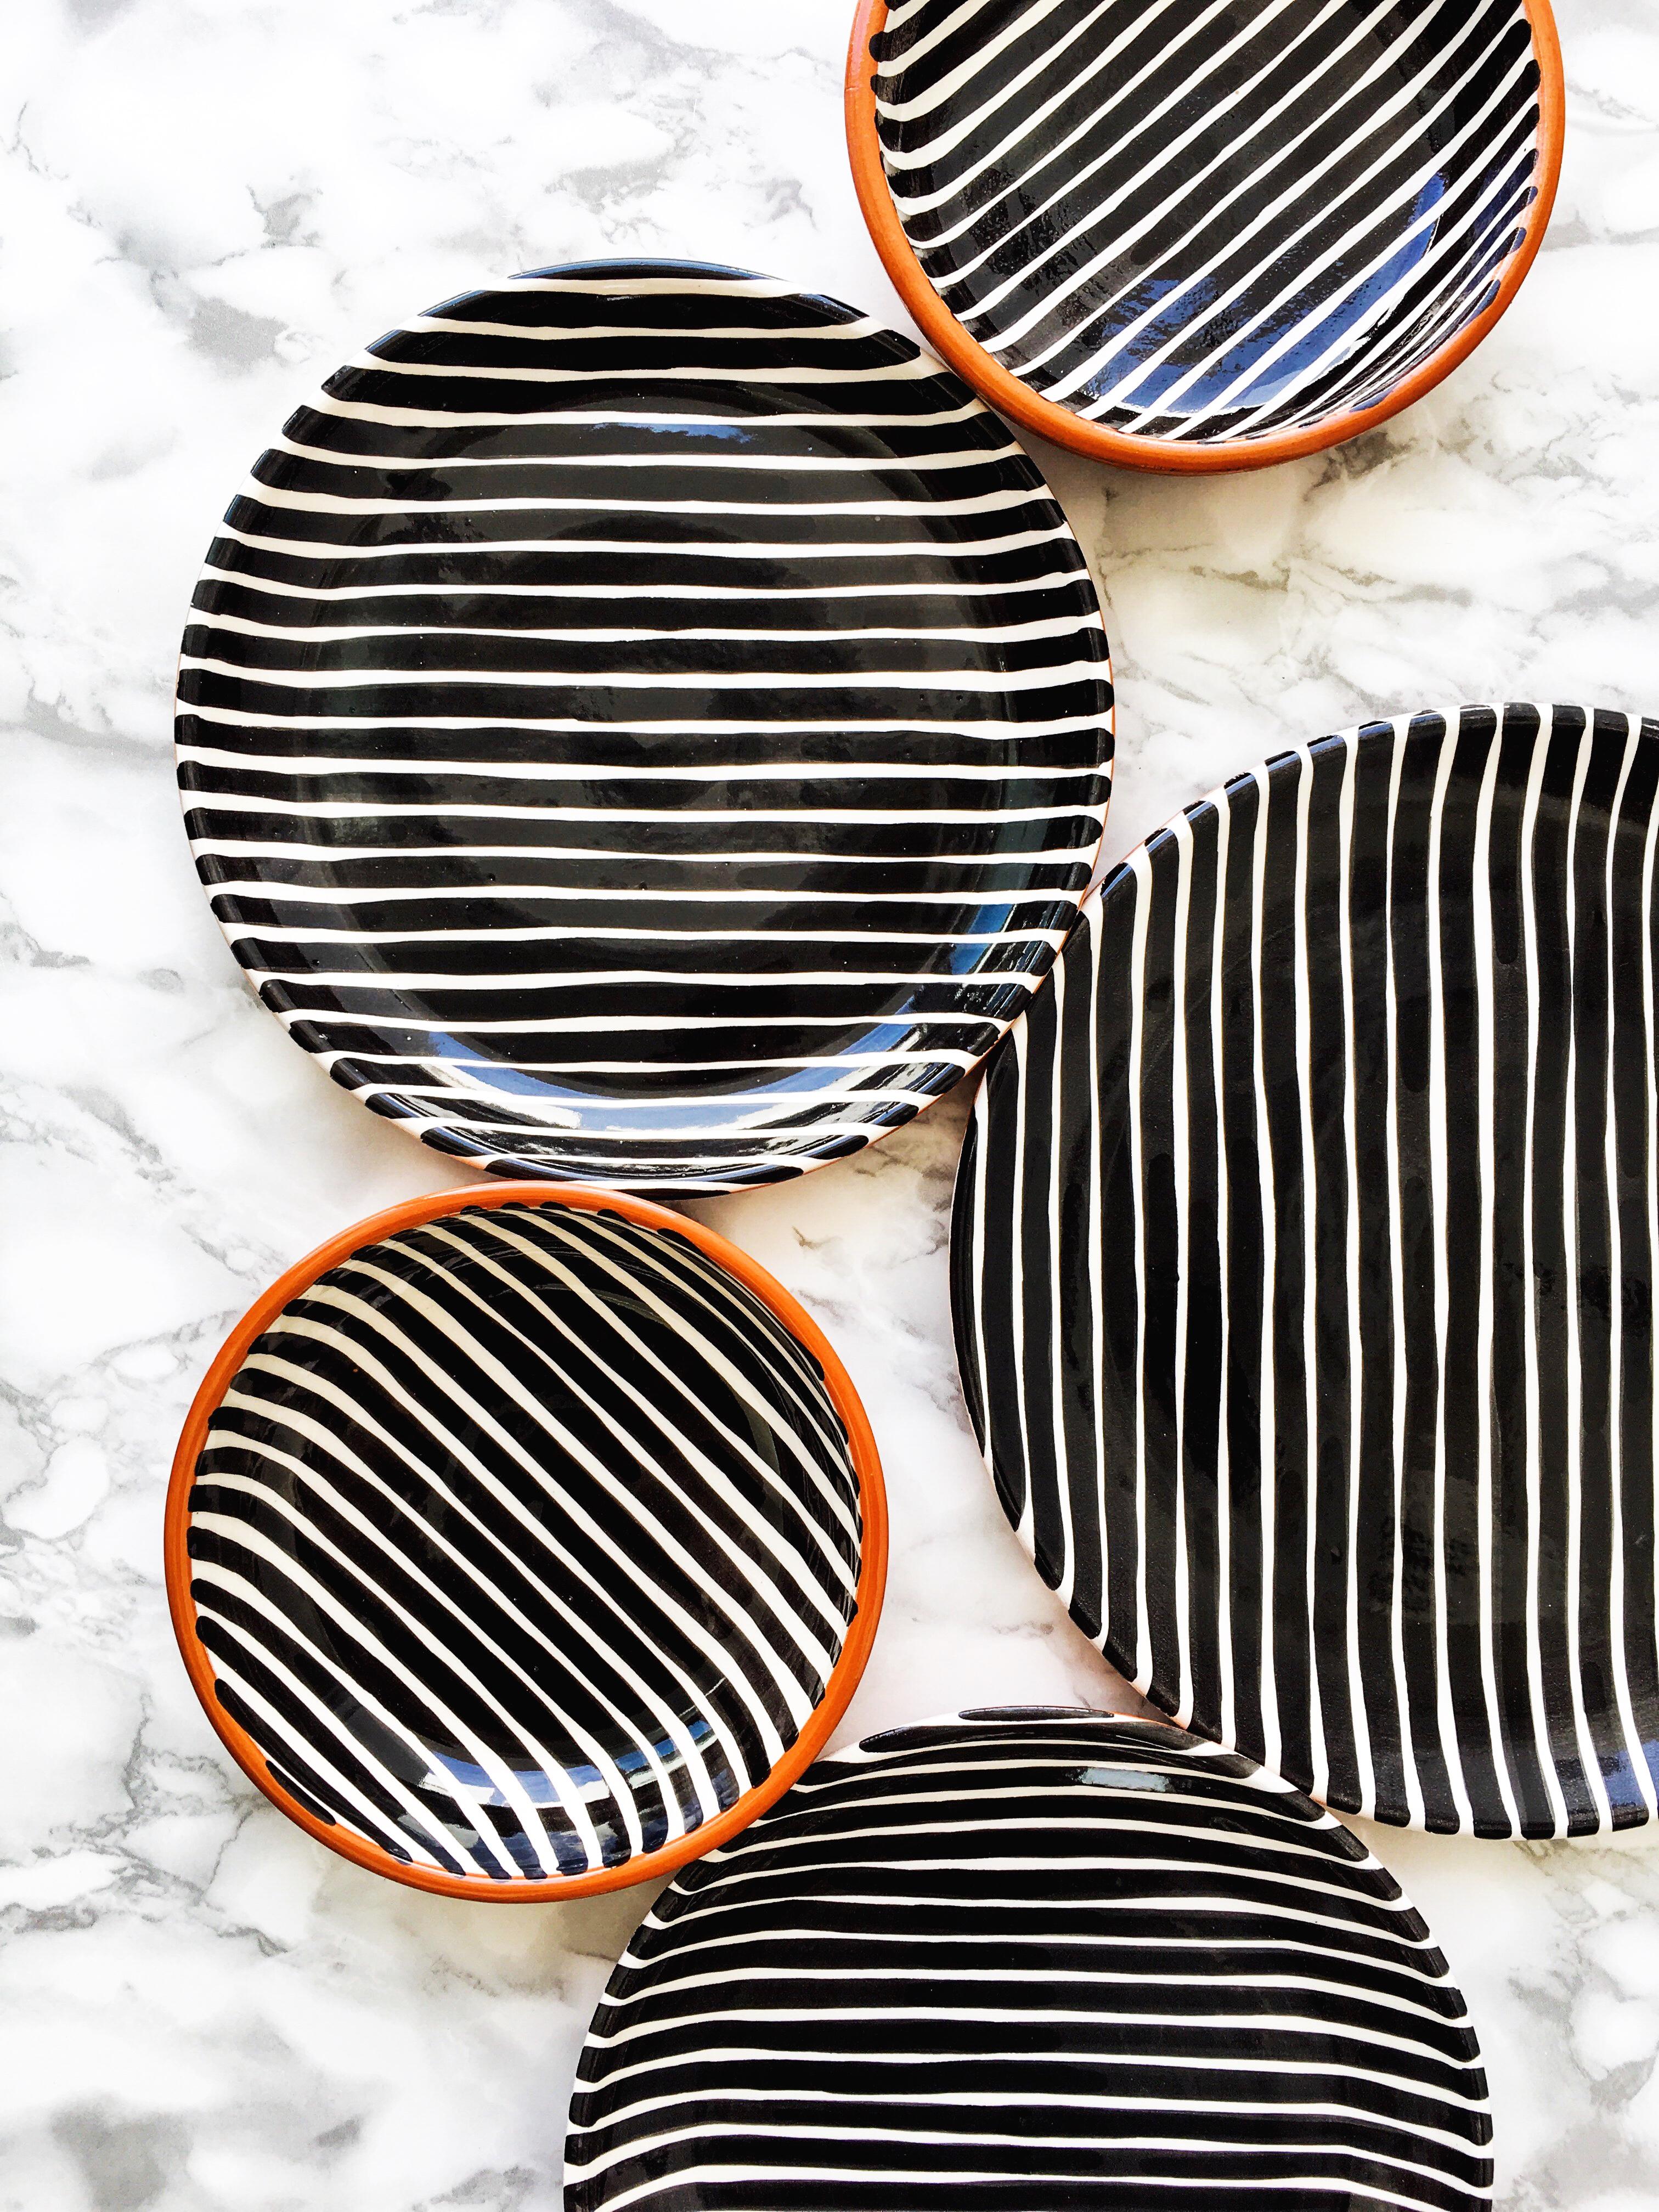 Spanish Casa Cubista Handmade Stripe Pattern Terracotta Bowls For Sale